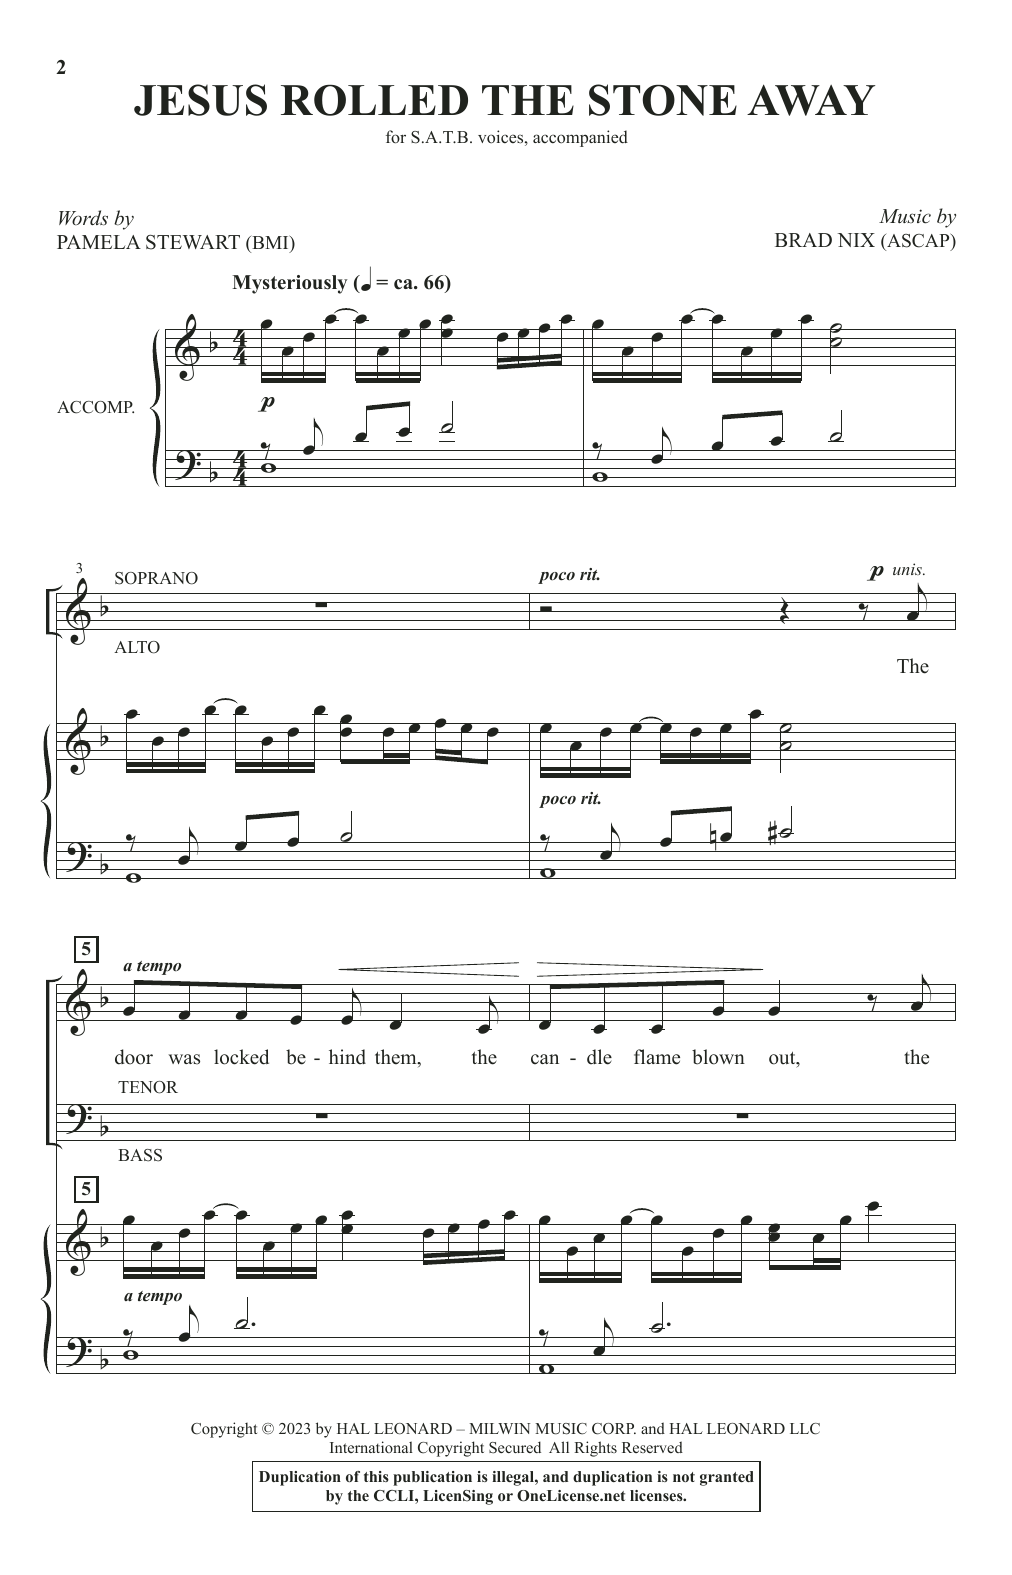 Pamela Stewart & Brad Nix Jesus Rolled The Stone Away Sheet Music Notes & Chords for SATB Choir - Download or Print PDF